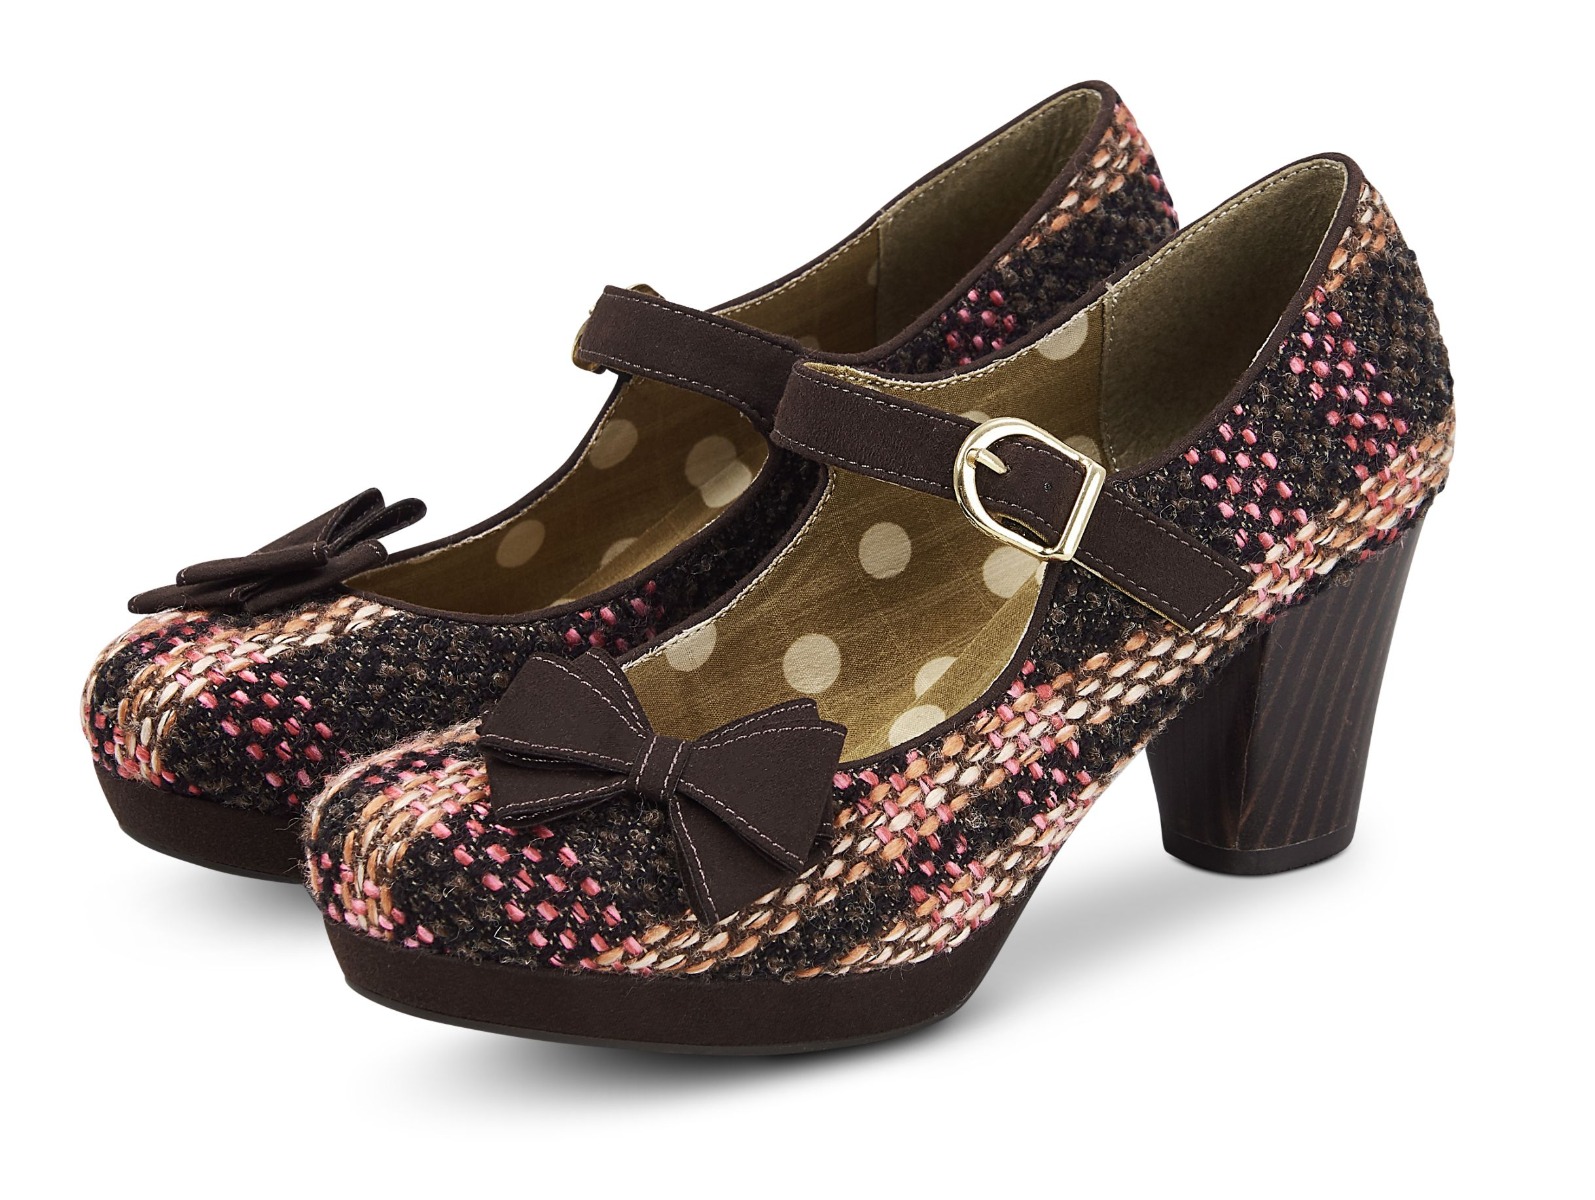 rs09224chbb_chaussures-escarpins-pin-up-retro-50-s-glam-chic-crystal-chocolat